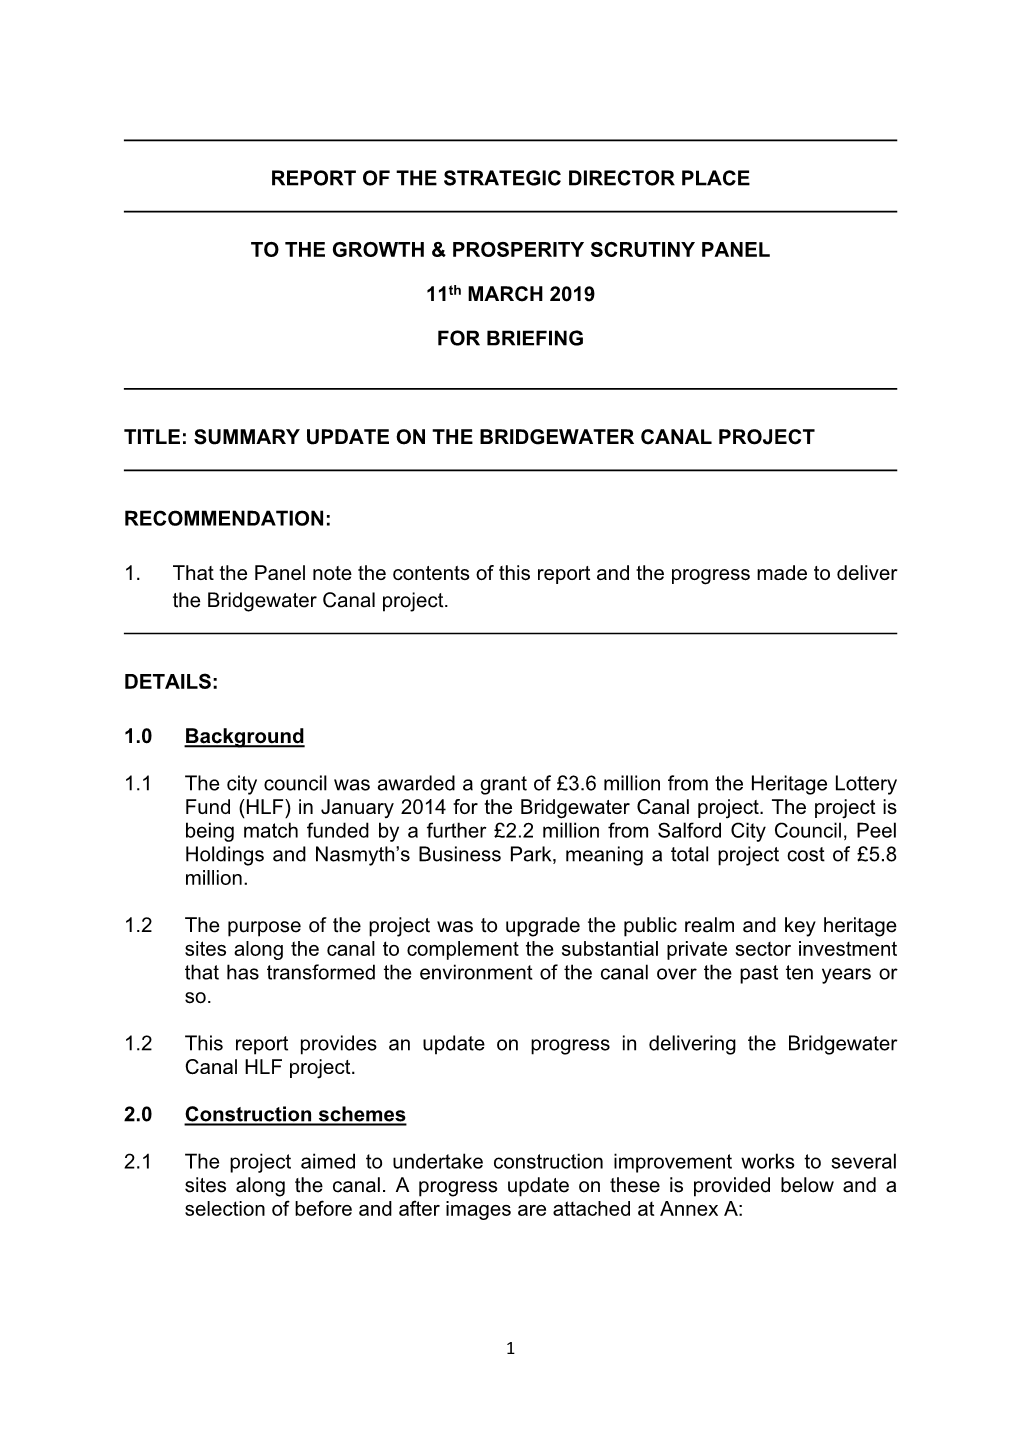 Bridgewater Canal Update. PDF 3 MB